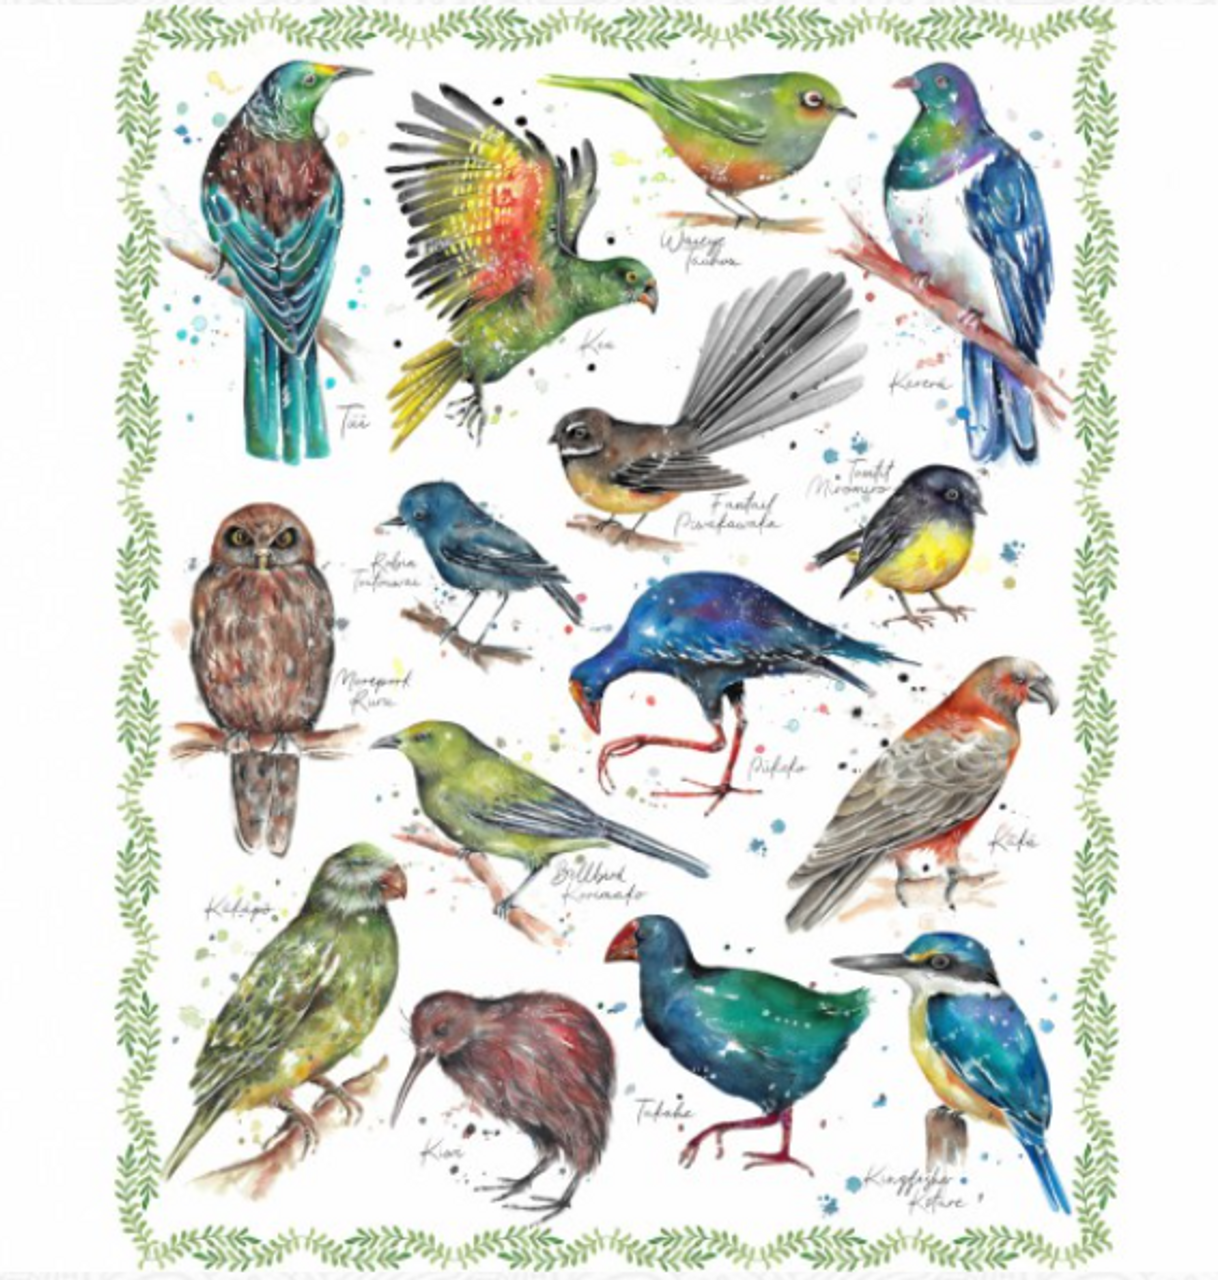 NZ Natives Birds fabric Panel by Fiona Clarke